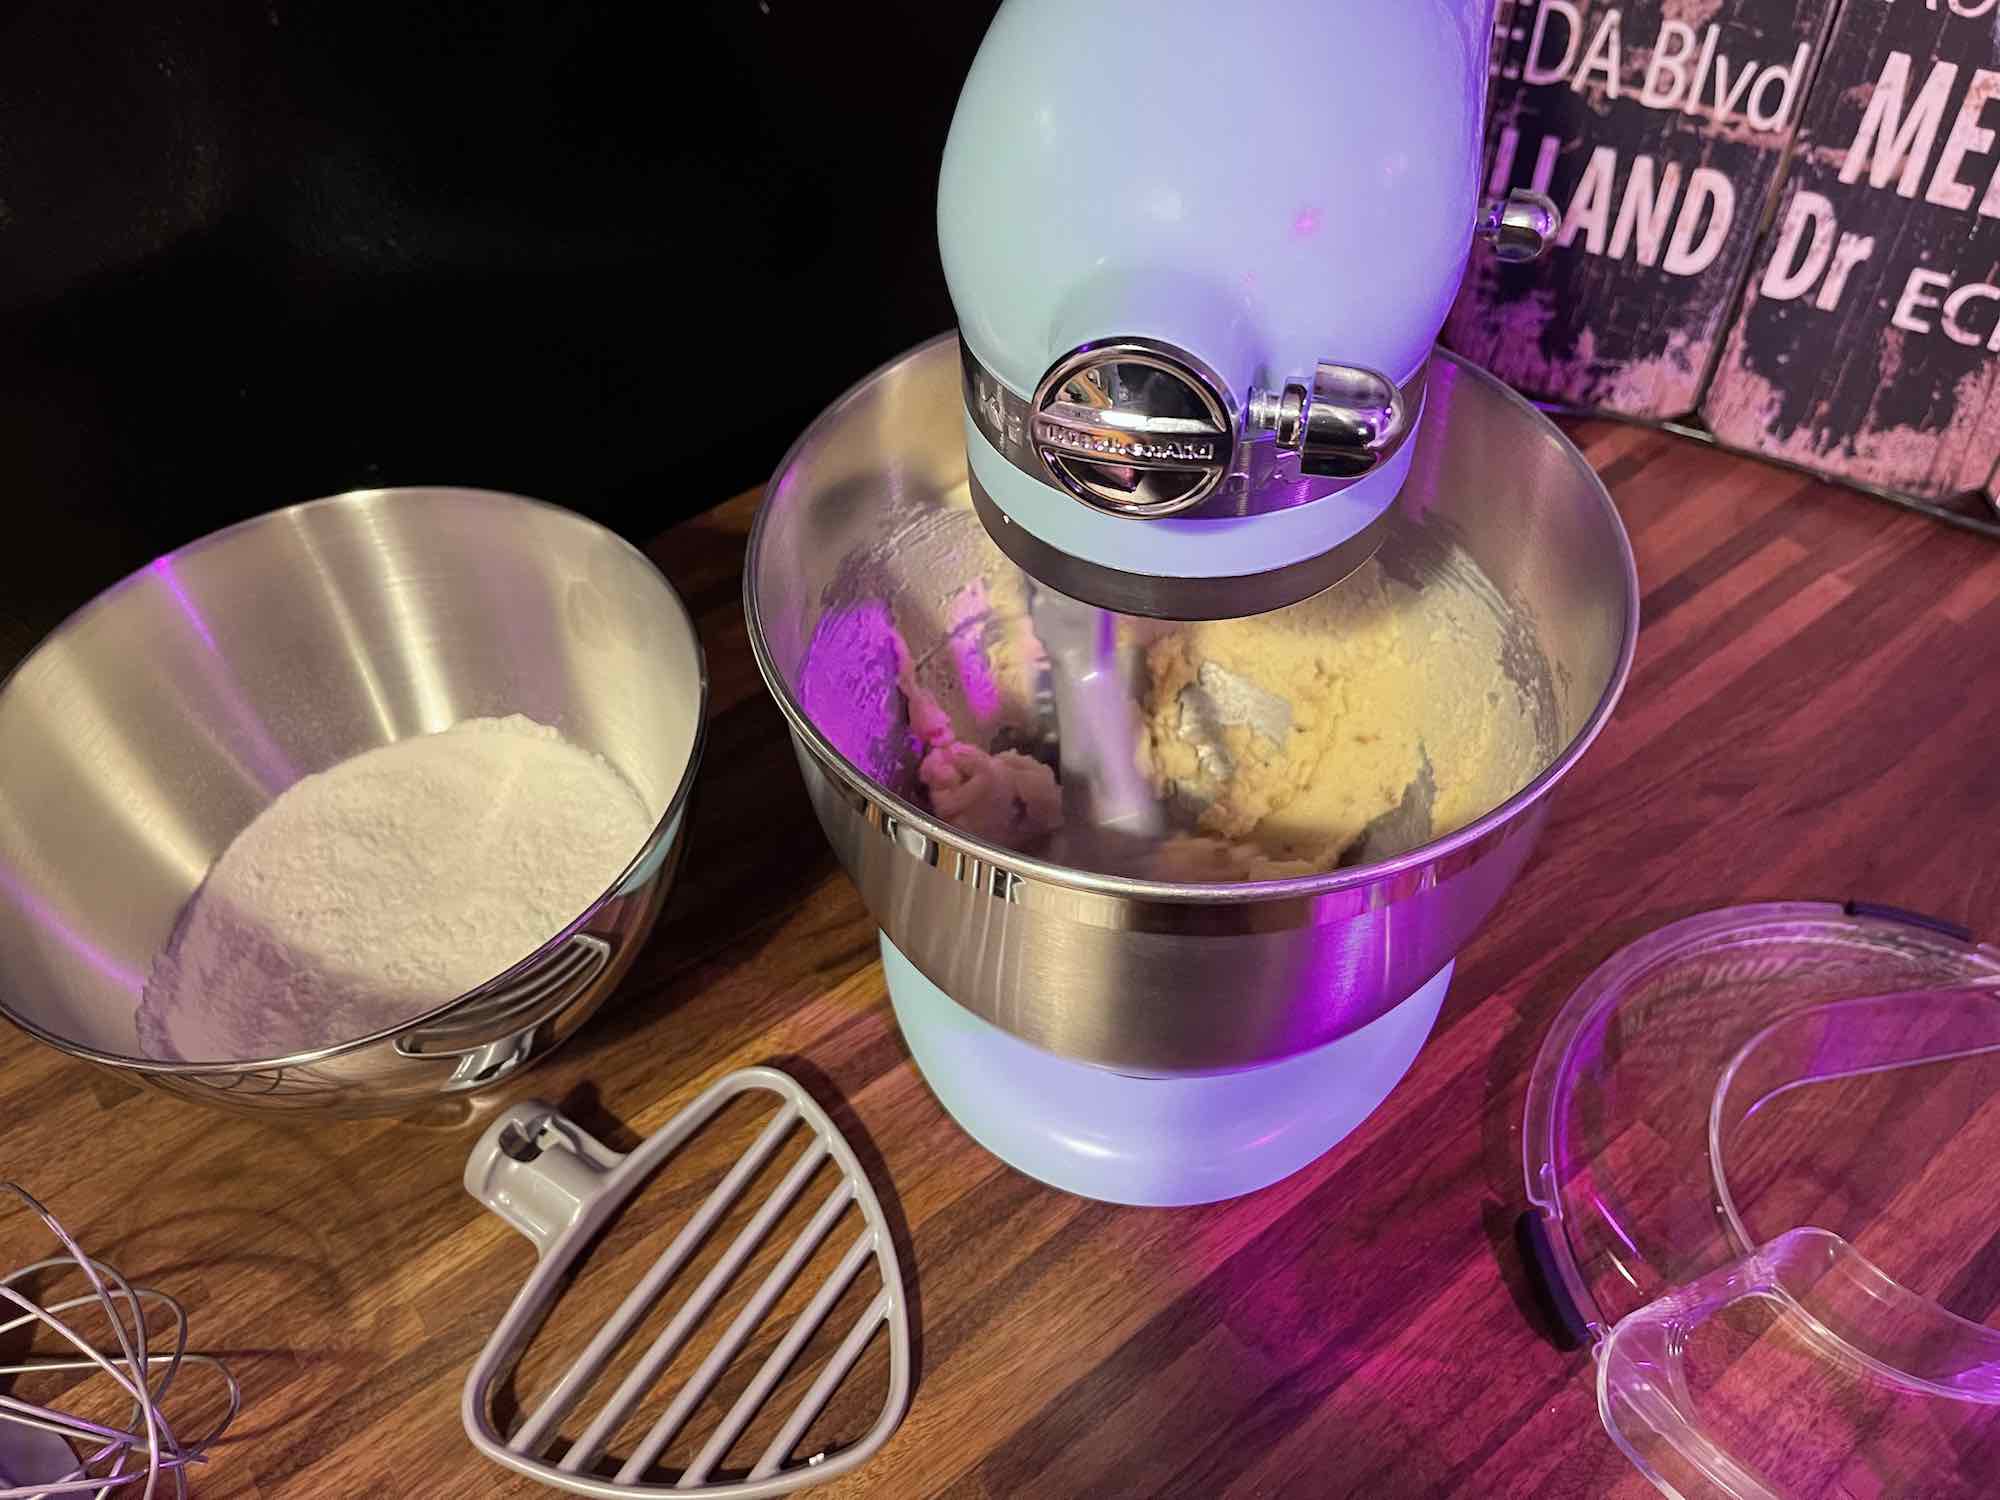 Premium AI Image  A blue kitchenaid mixer with a pink stand mixer